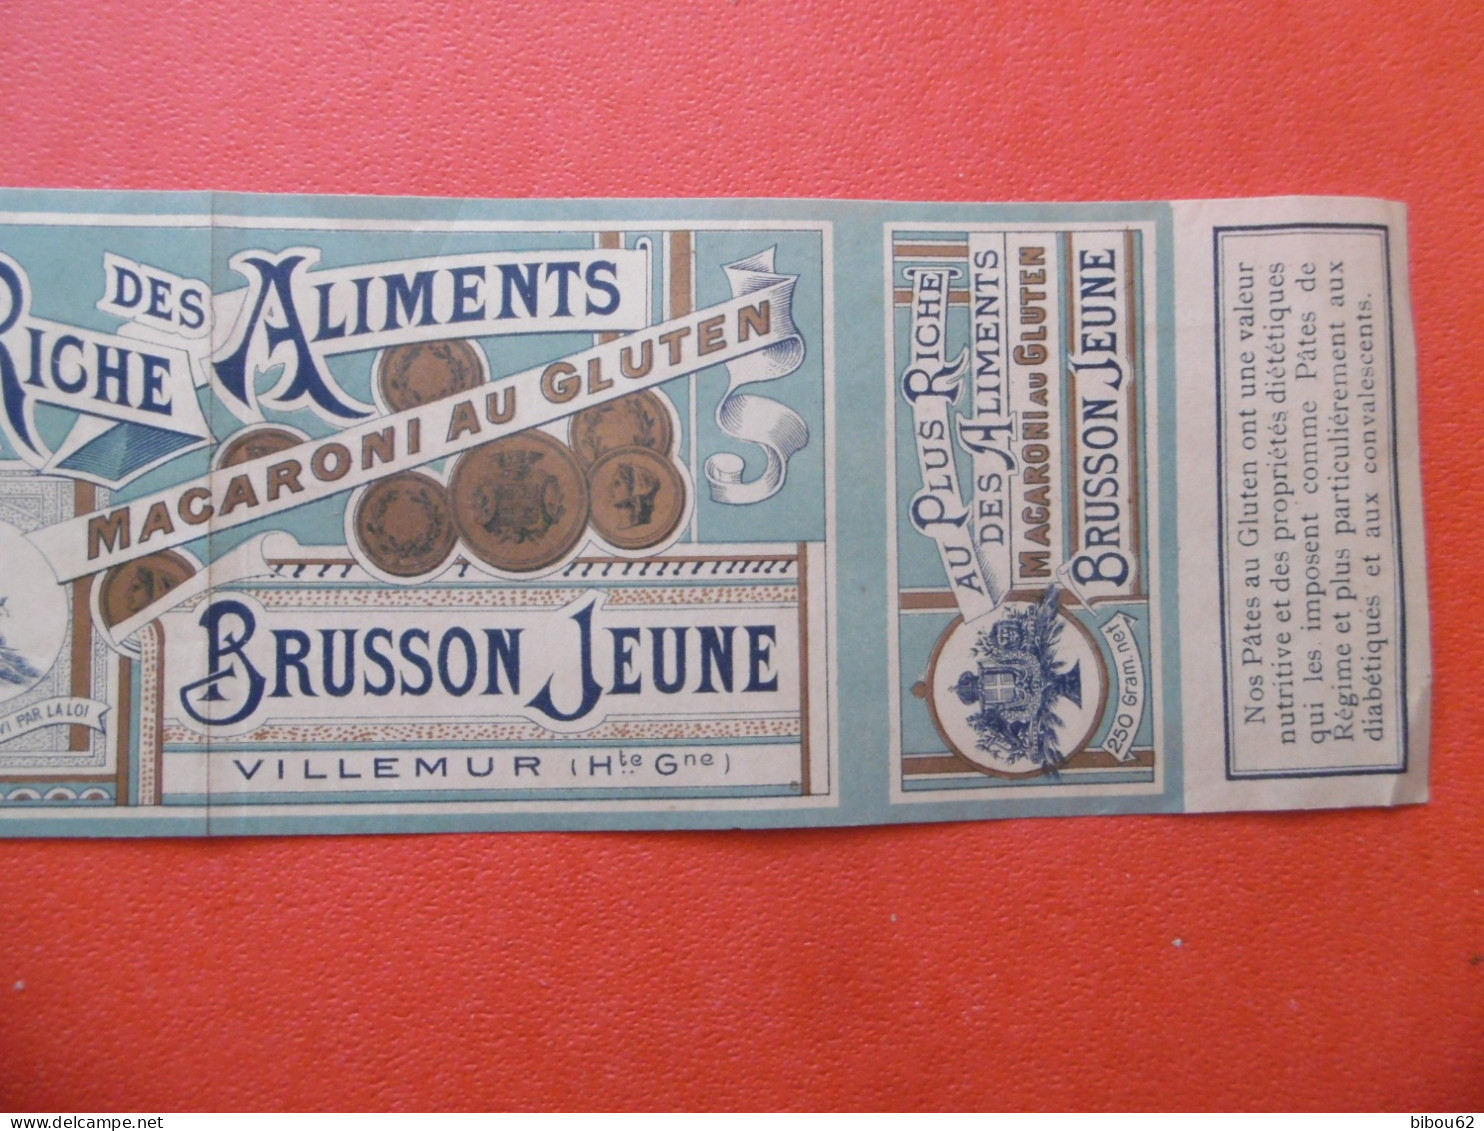 VILLEMUR  ( 31 ) Bande Publicitaire D'habillage De Boite - BRUSSON  Jeune - Macaroni Au Gluten - 1900 - Alimentare